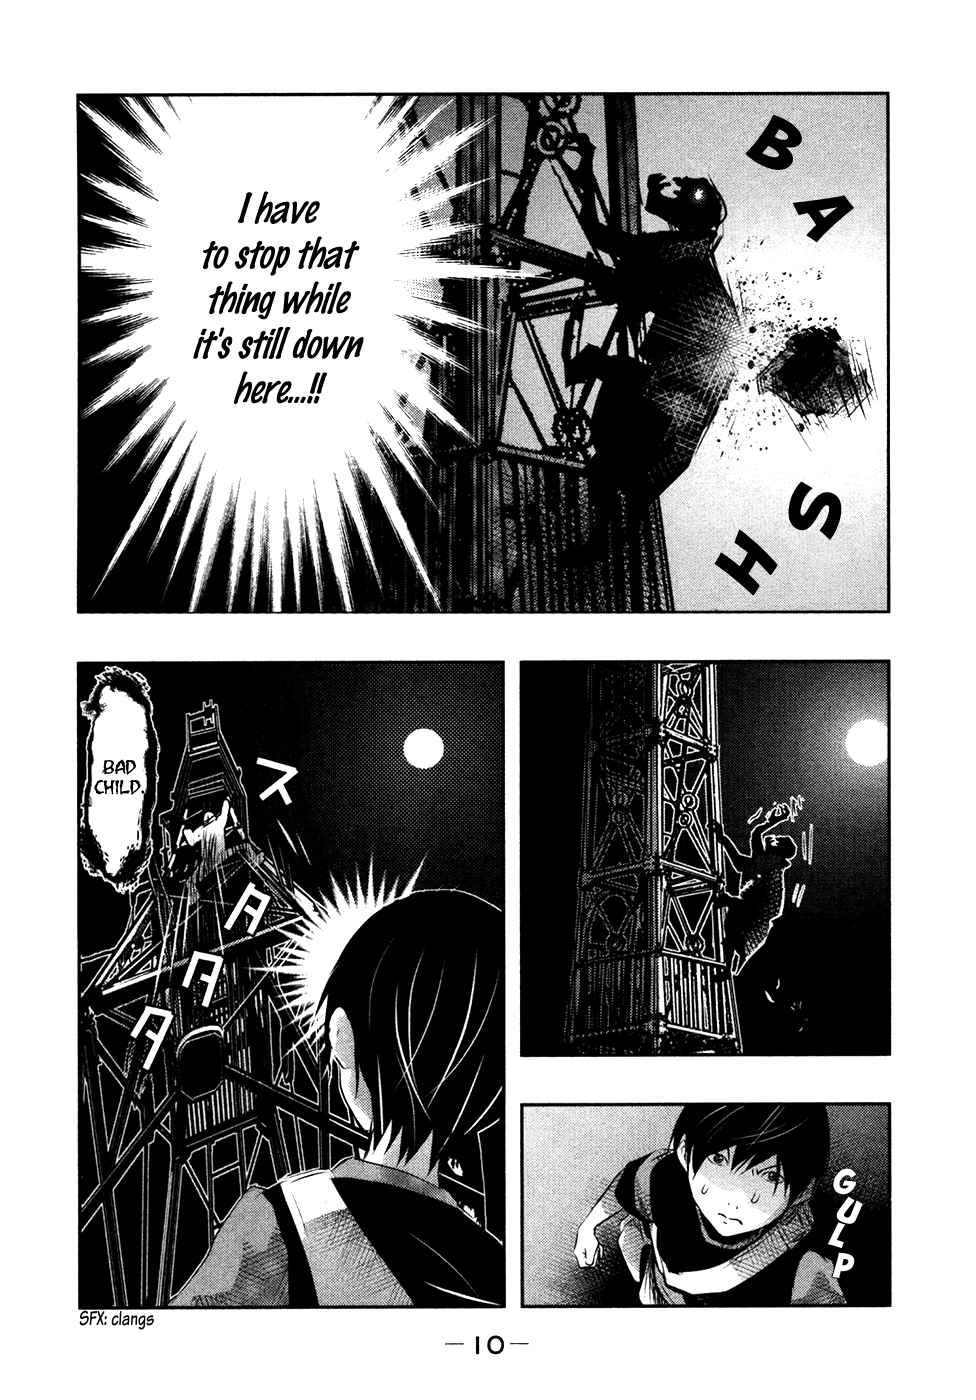 Kasouba no Nai Machi ni Kane ga Naru Toki Vol. 4 Ch. 44 The Offense and Defense of the Watchtower